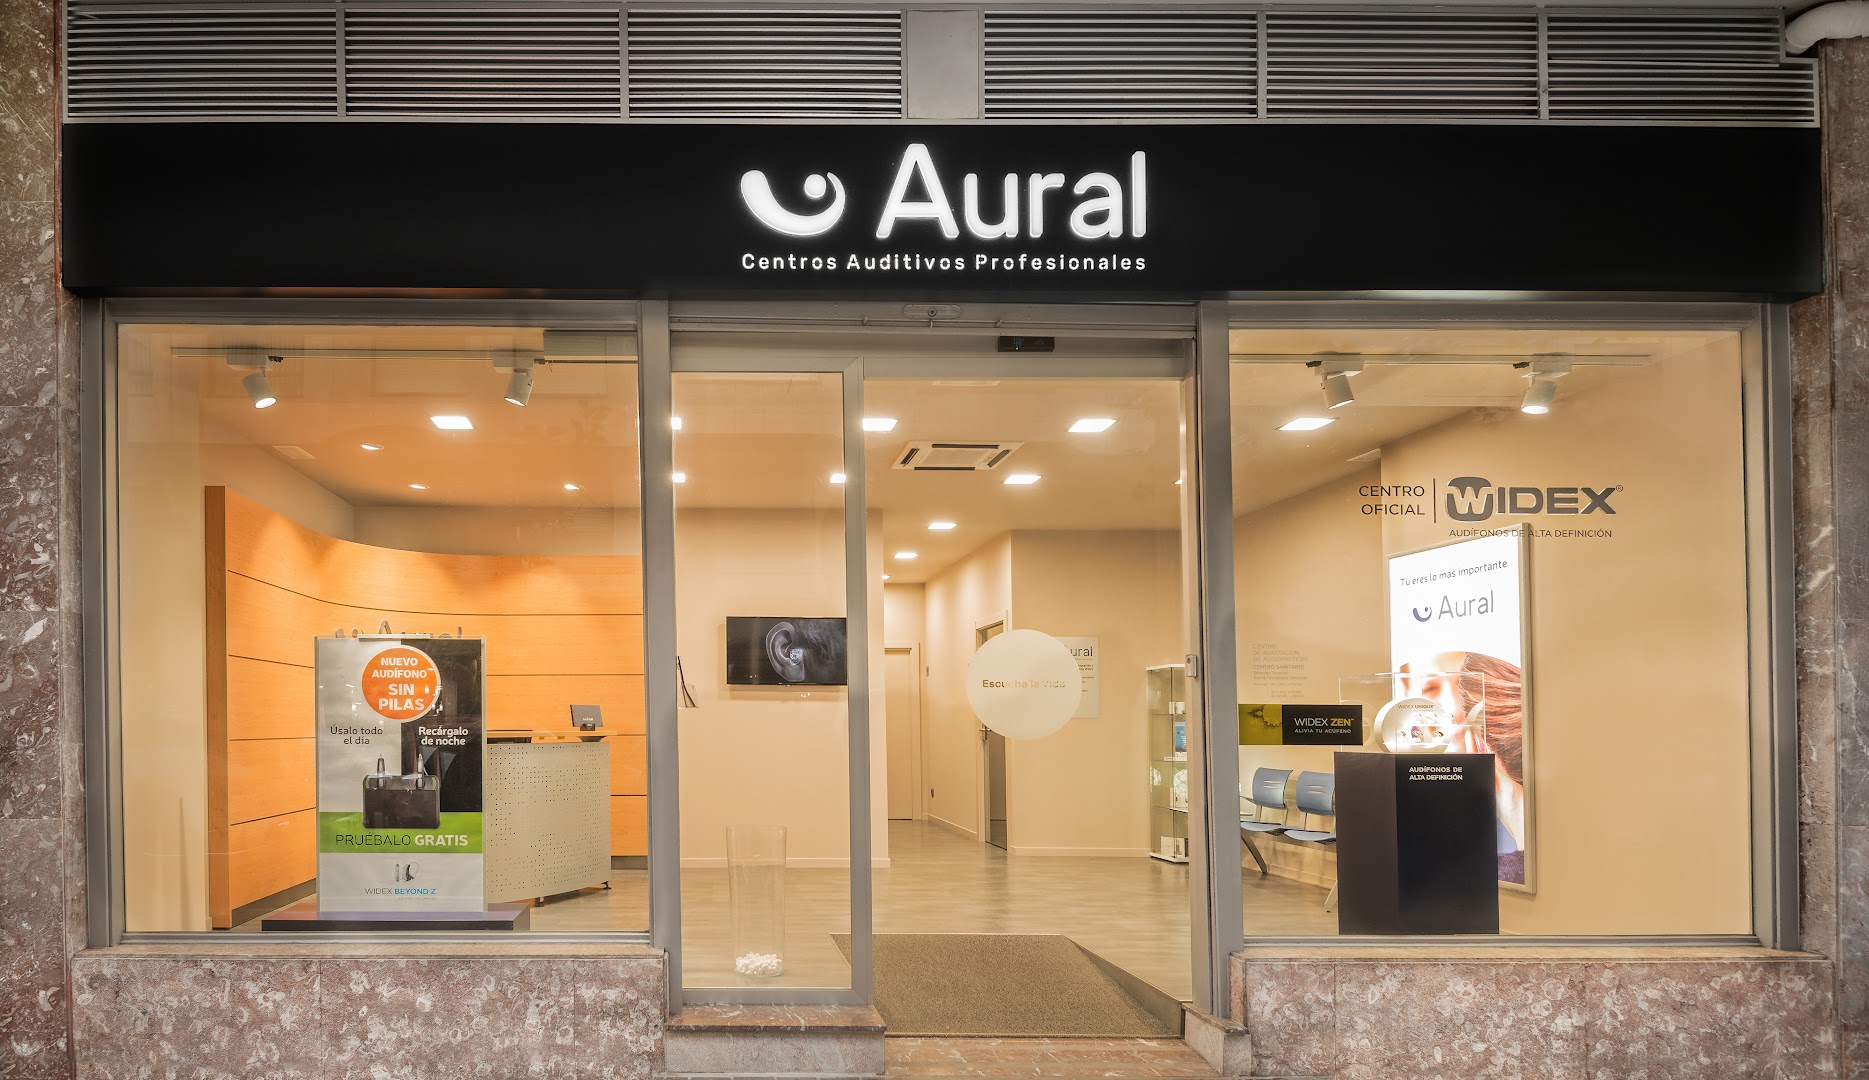 Aural Centros Auditivos Profesionales - Centro Oficial Widex Audífonos